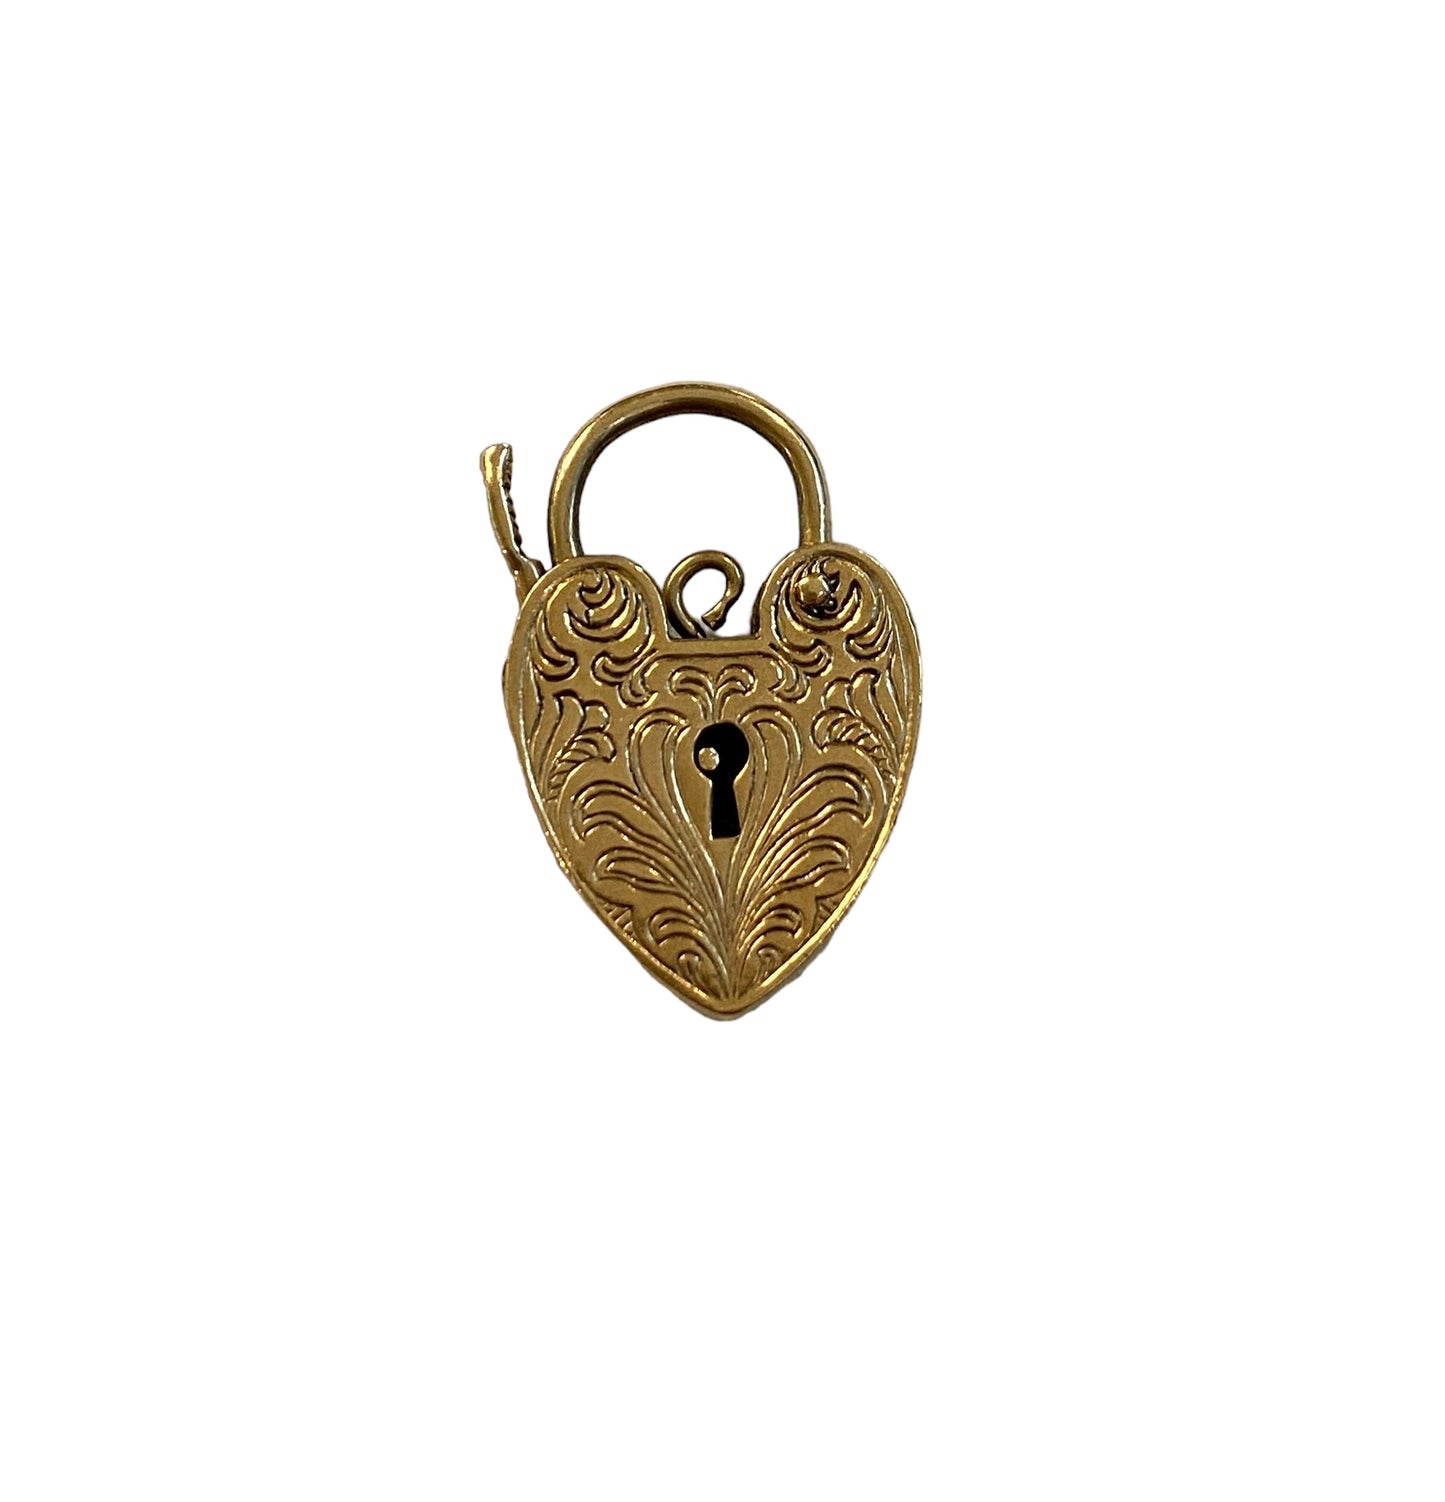 9ct vintage ornate padlock by S&K London 1971